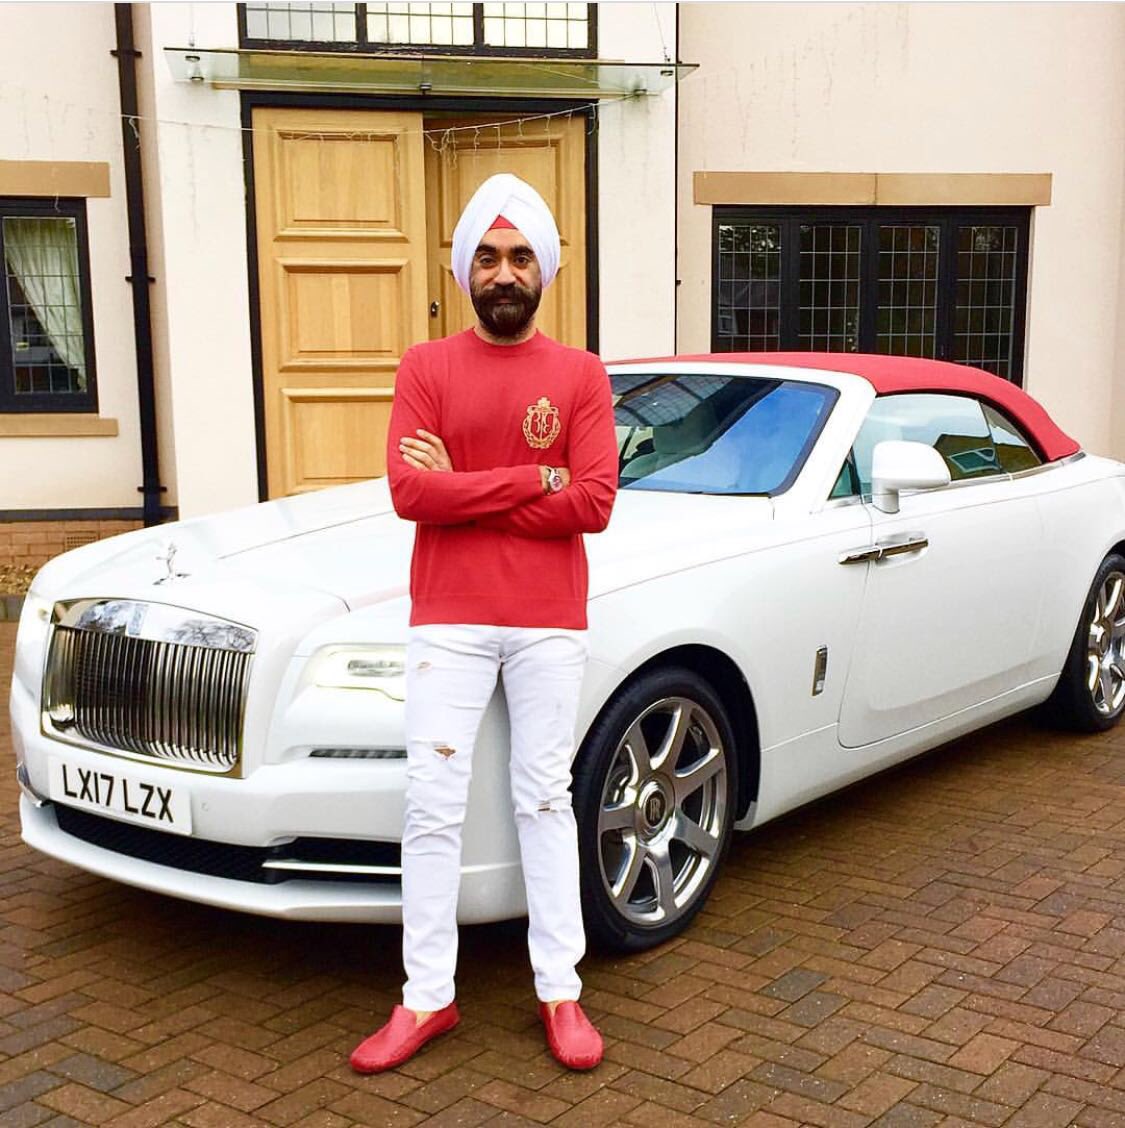 PHOTOS UK Billionaire Reuben Singh matched turbans to his Rolls Royce